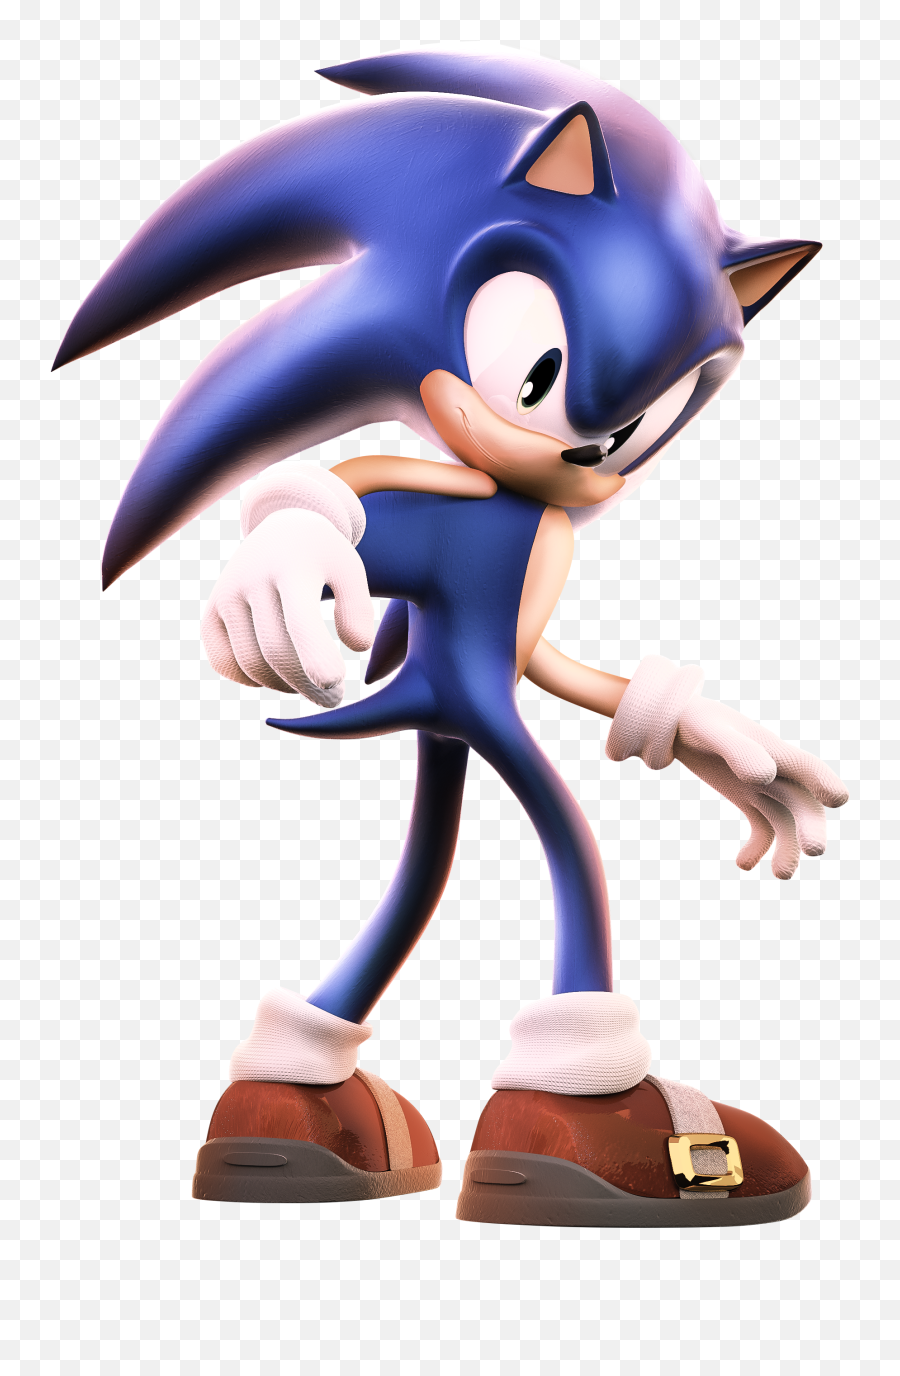 Sonic The Hedgehog Next Gen By Fentonxd - Sonic The Hedgehog Png,Sonic The Hedgehog Png